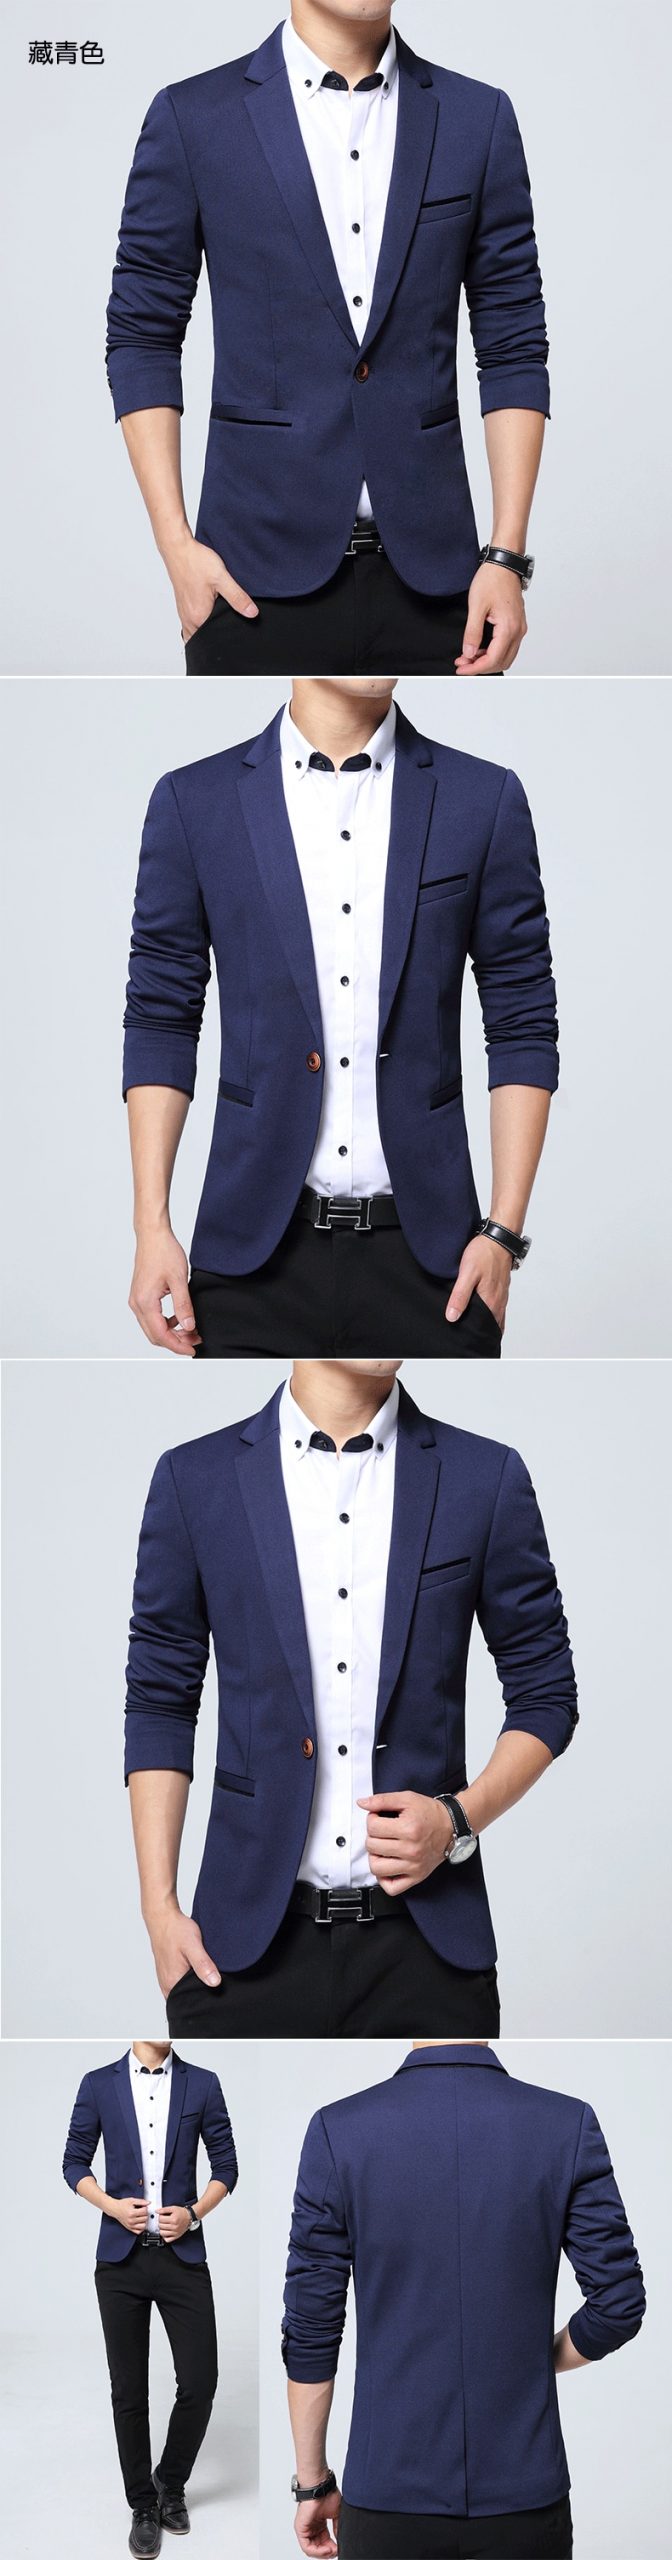 New Arrival Luxury Men Blazer New Spring Fashion Brand High Quality Cotton Slim Fit Dress Suit Jacket Coat